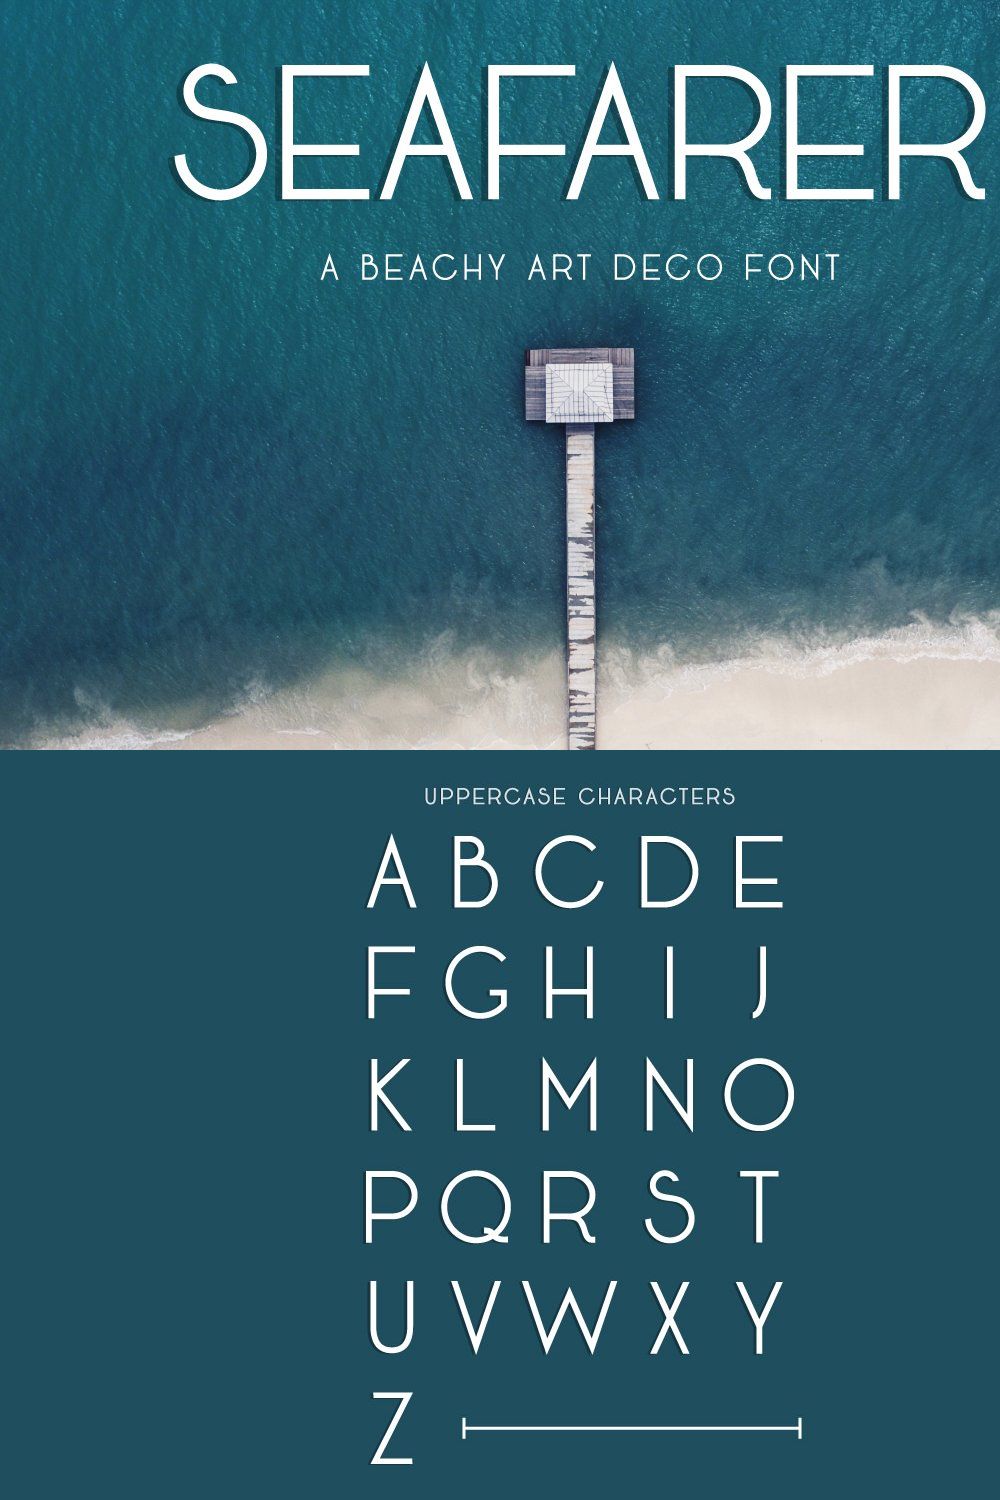 Seafarer | A Beachy Art Deco Font pinterest preview image.